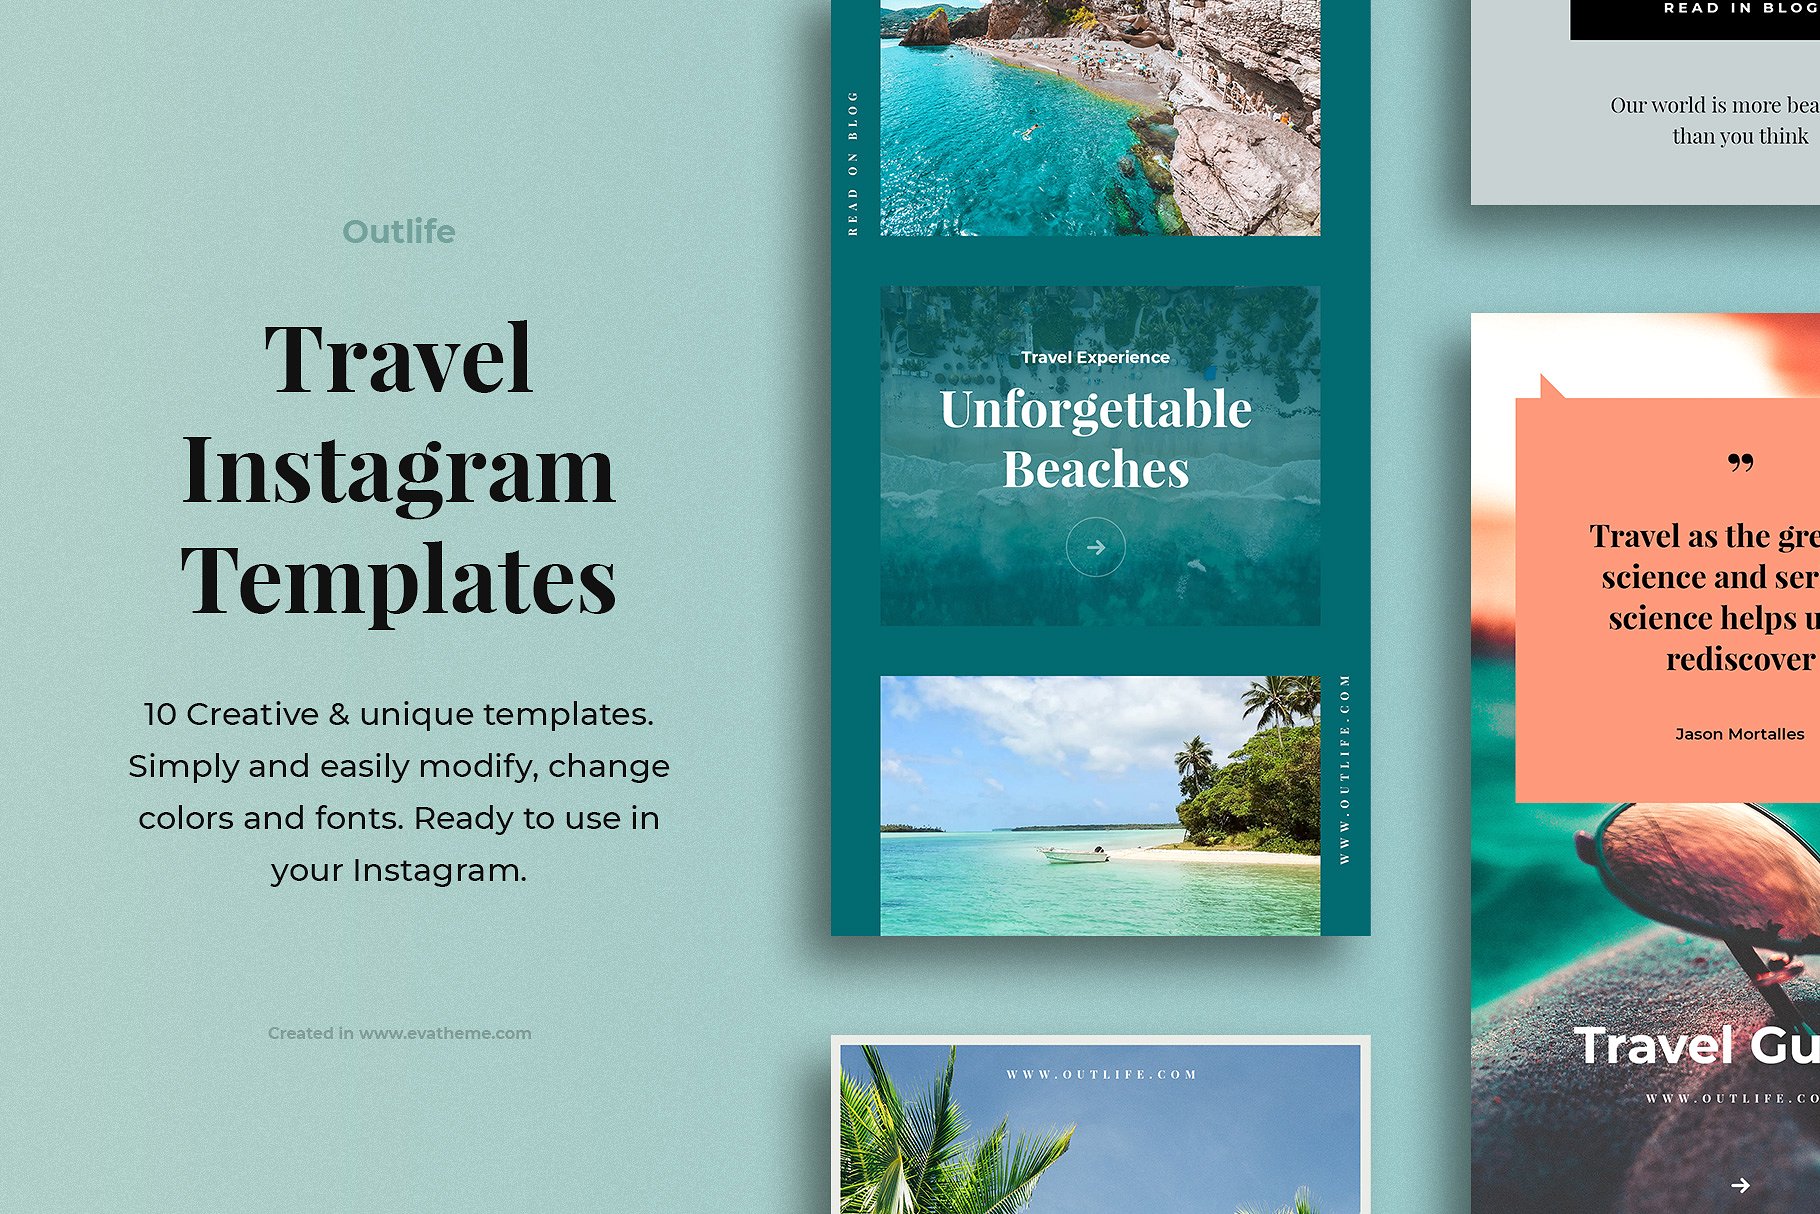 令人愉悦的婚礼旅游产品促销Instagram模板 Pleasant Wedding Travel Product Promotion Instagram Template插图3